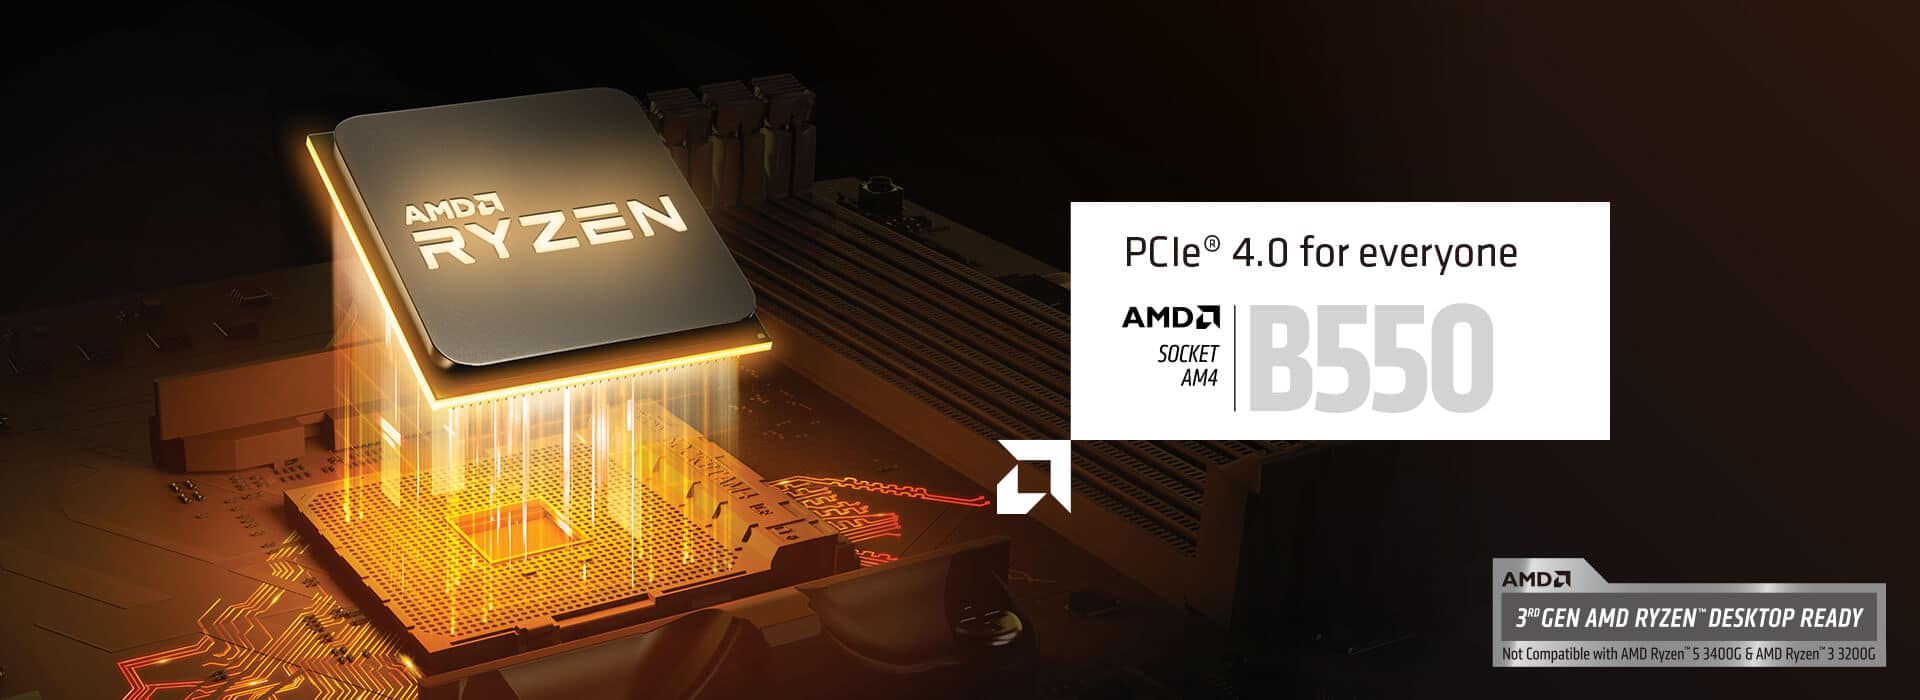 AMD Ryzen B550 PCIe 4.0 Poster